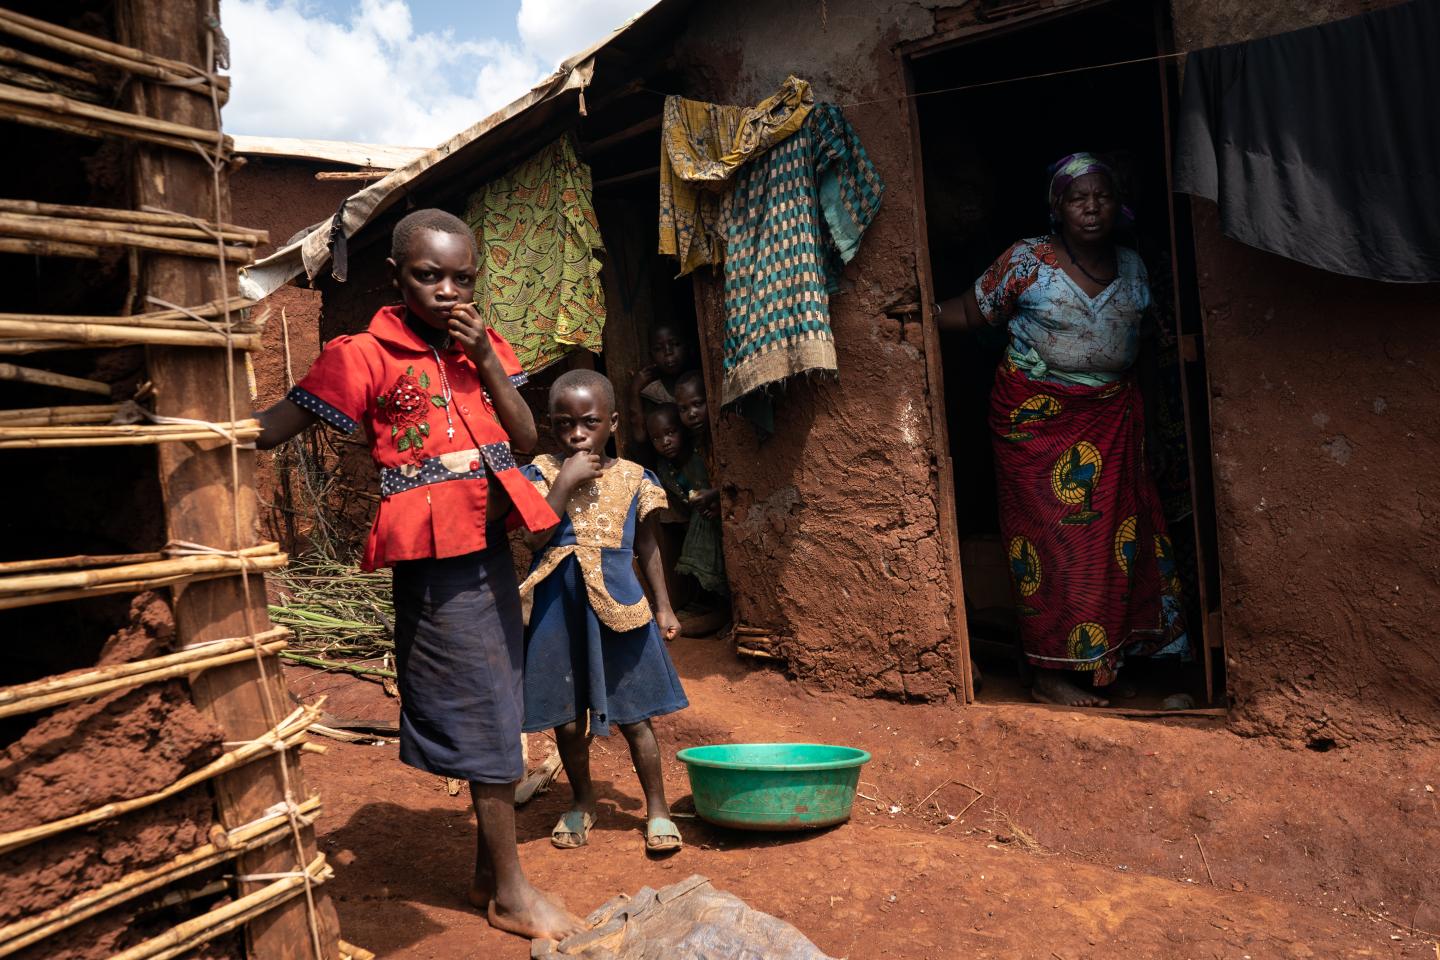 Human Suffering Worsens in DRC, the Heart of Africa